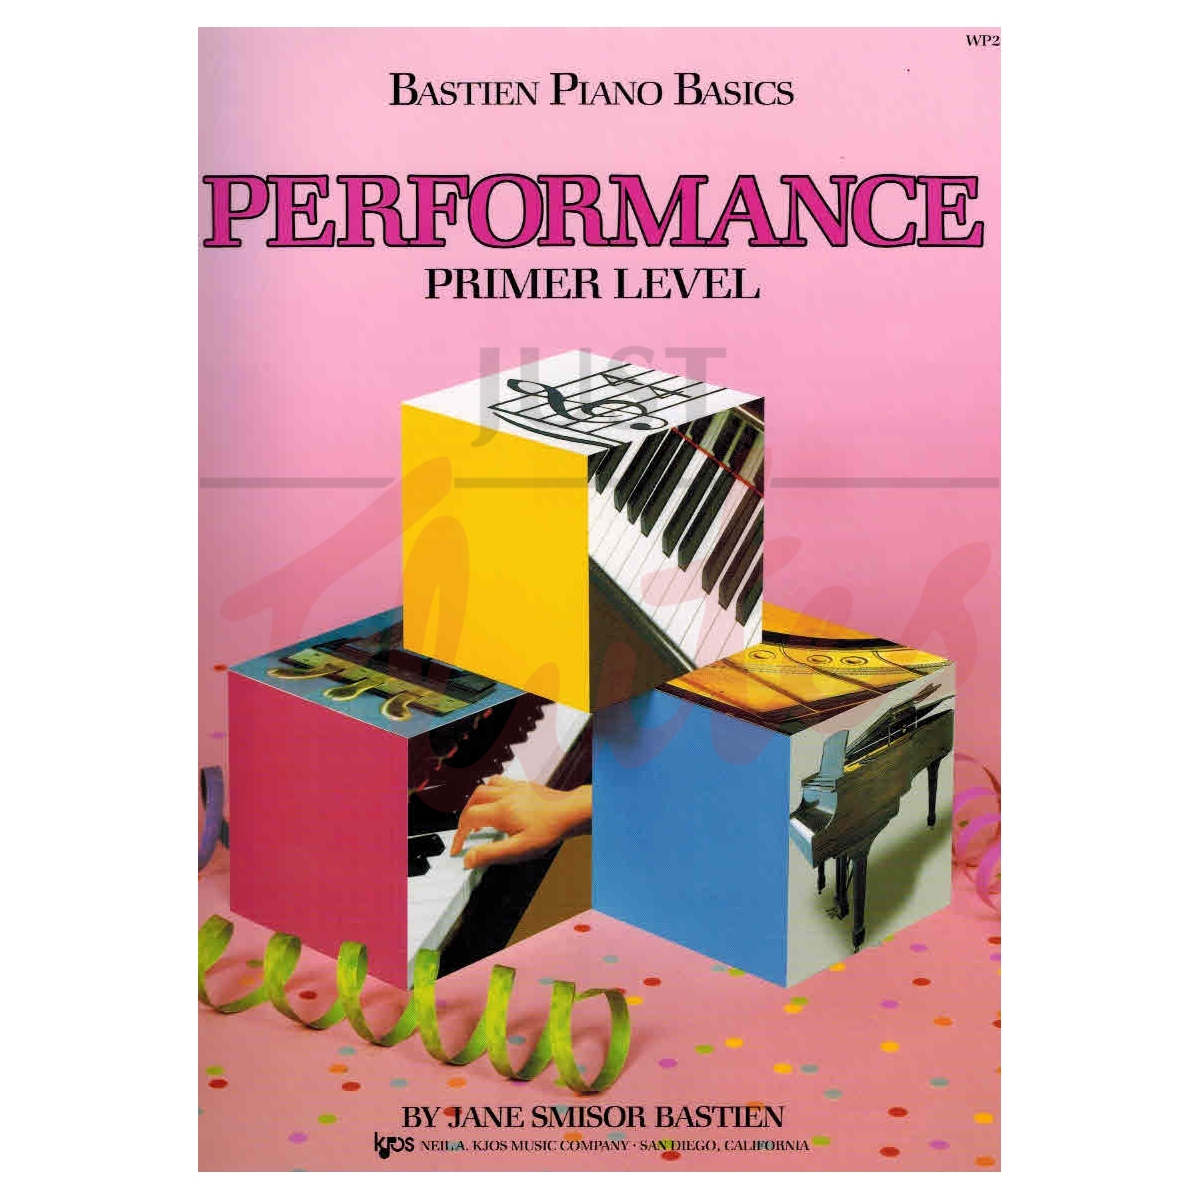 Bastien Piano Basics: Performance, Primer Level